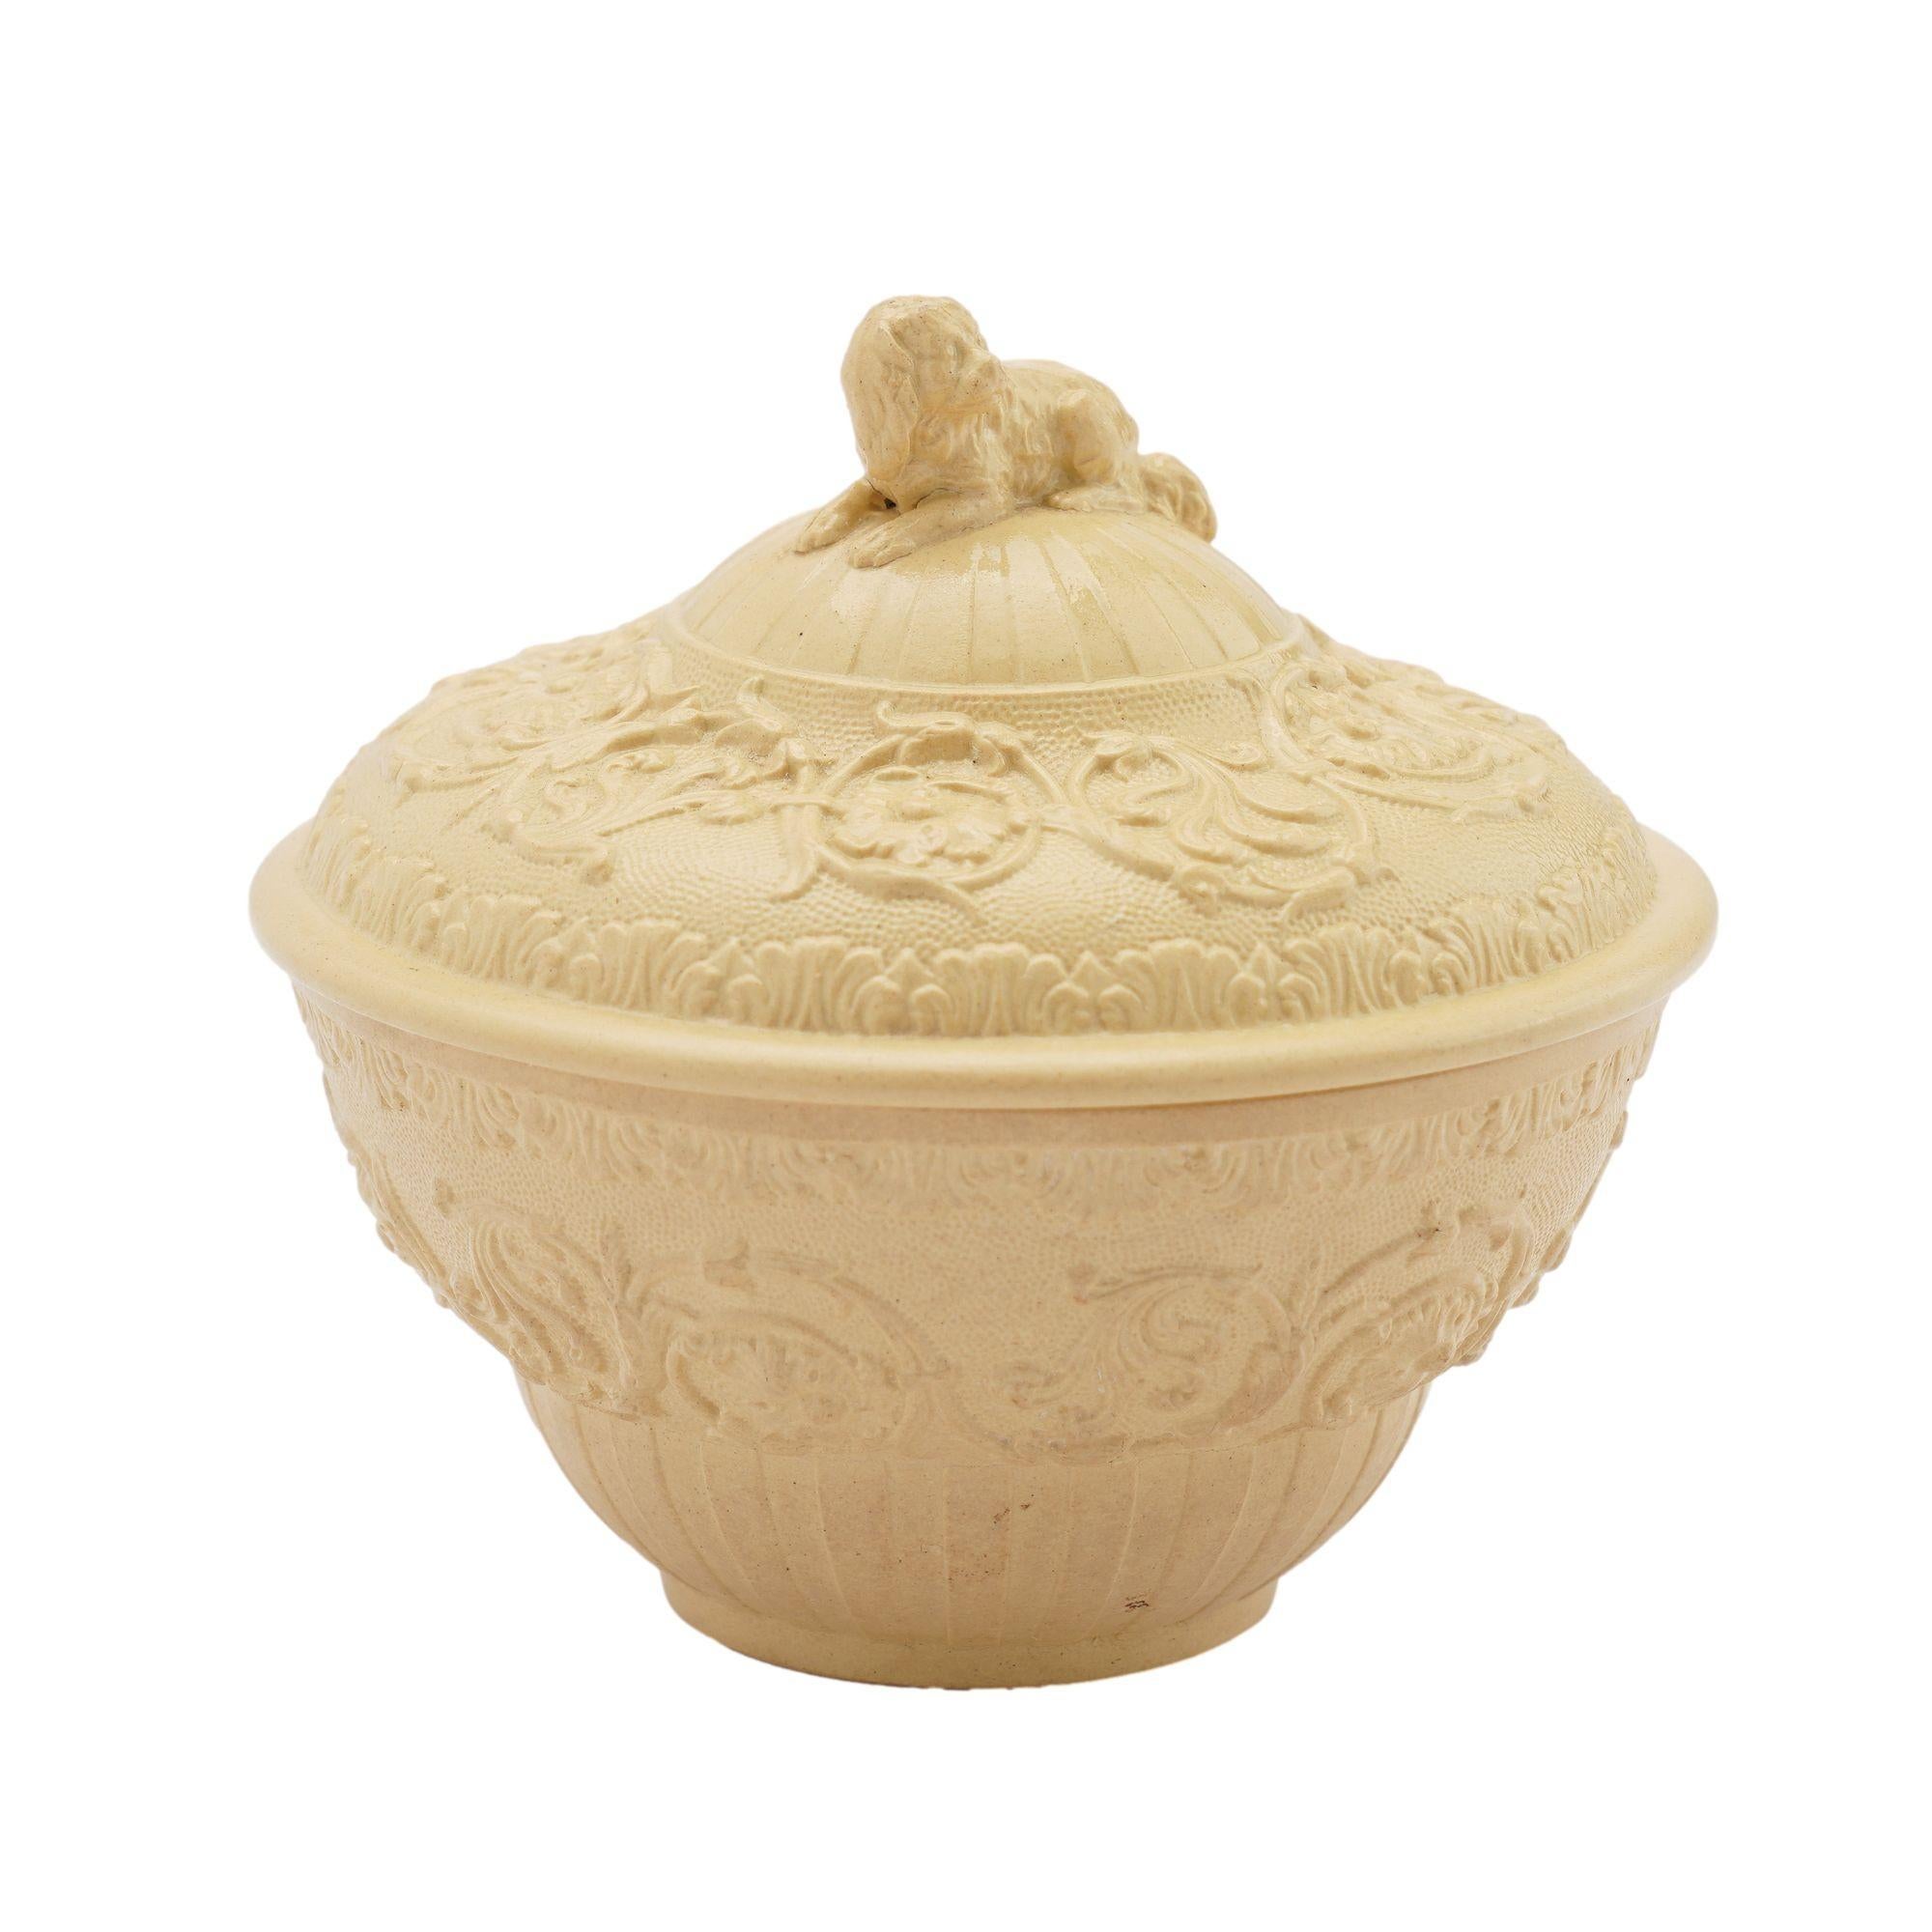 Wedgwood Caneware ceramic sugar bowl, c. 1815-20 For Sale 1